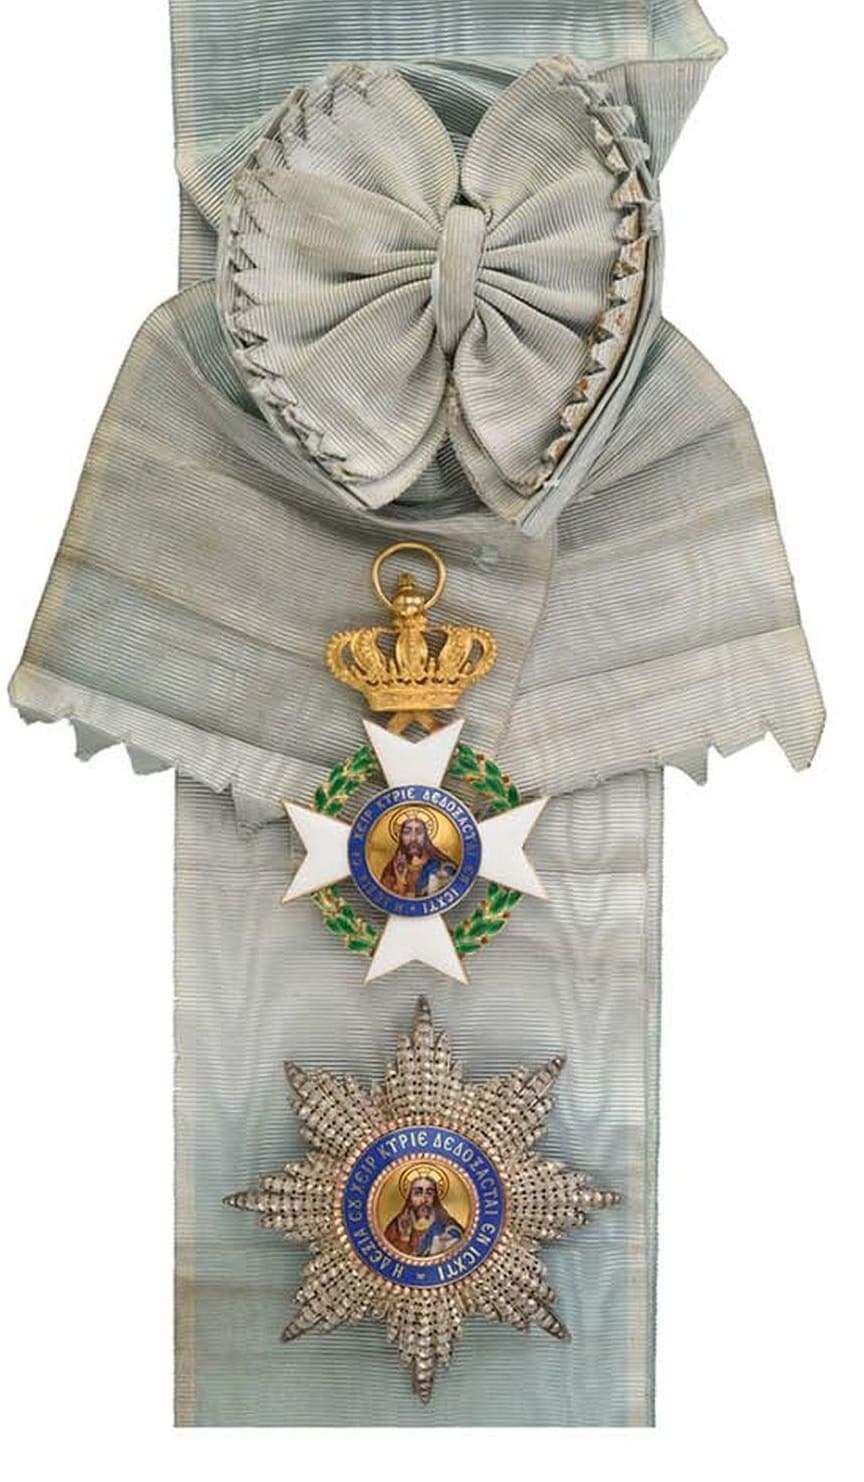 Grand Cross Order of the Redeemer made by Lemaitre.jpg